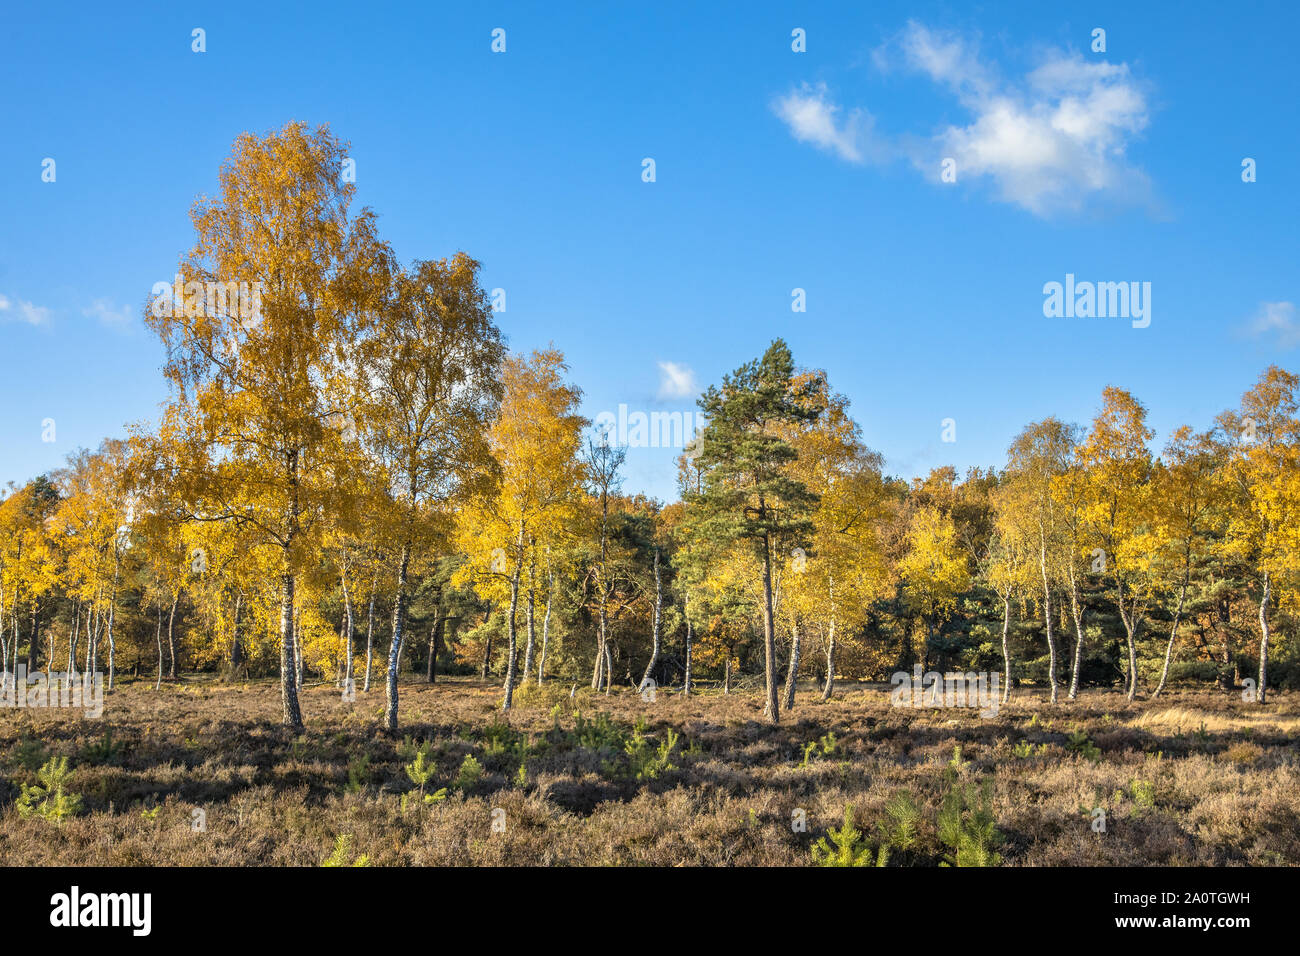 Yellow colored deciduous birch (Betula) trees on heathland in autumn season of november, Drenthe, Netherlands Stock Photo